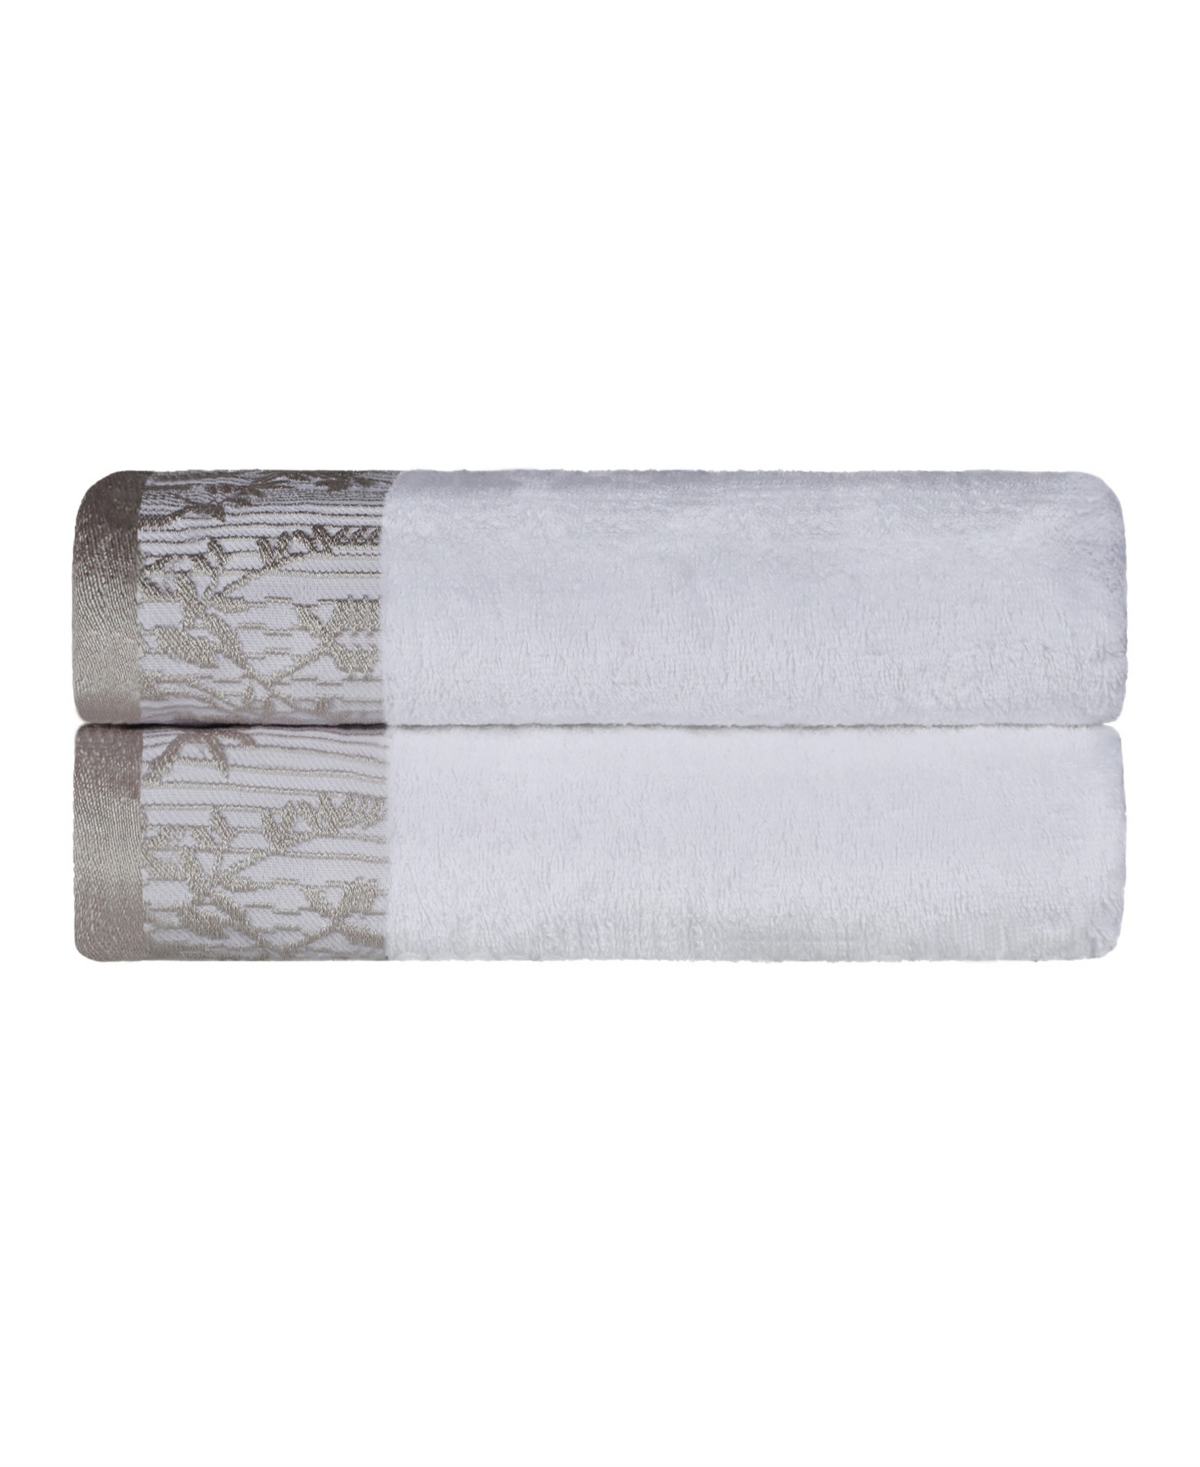 Superior Wisteria Floral Embroidered Jacquard Border Cotton Bath Towel Set, 2 Pieces In White